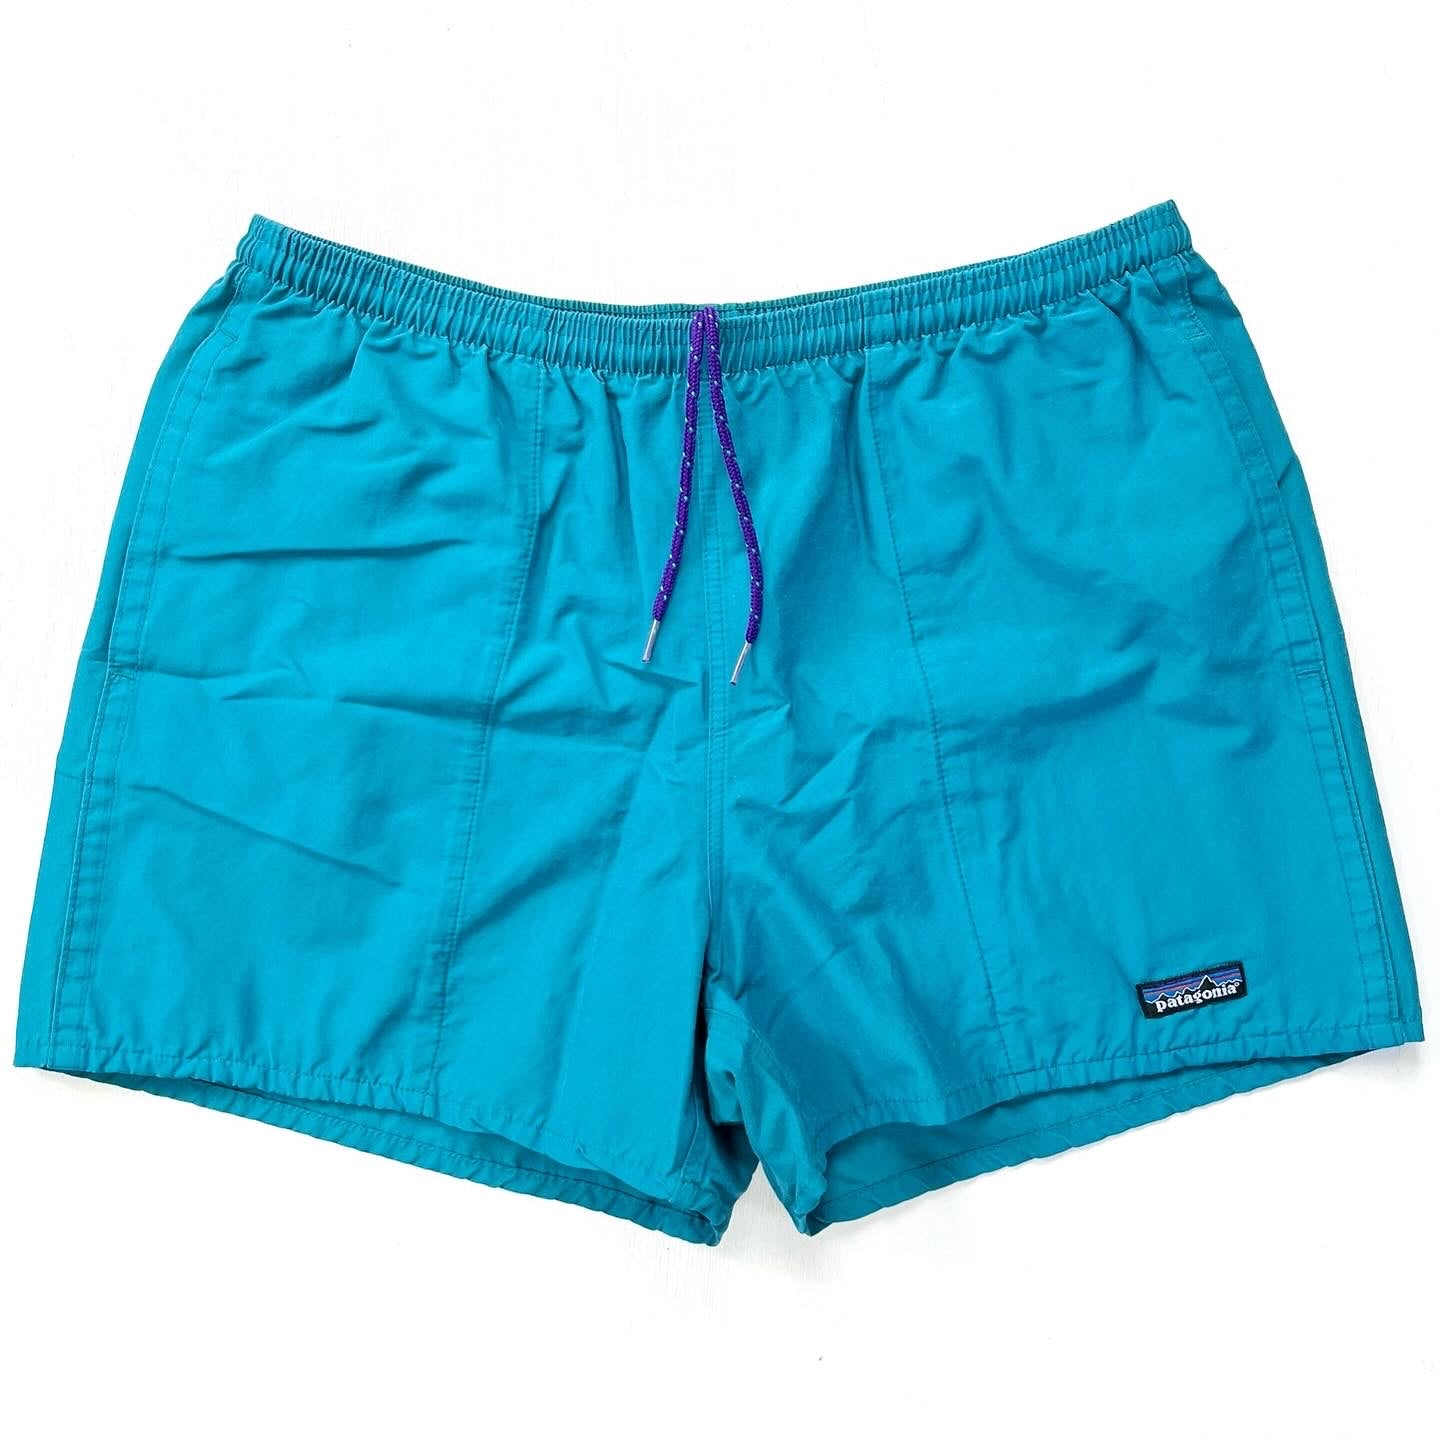 1995 Patagonia Mens 4” Nylon Baggies Shorts, Aqua Blue (L)